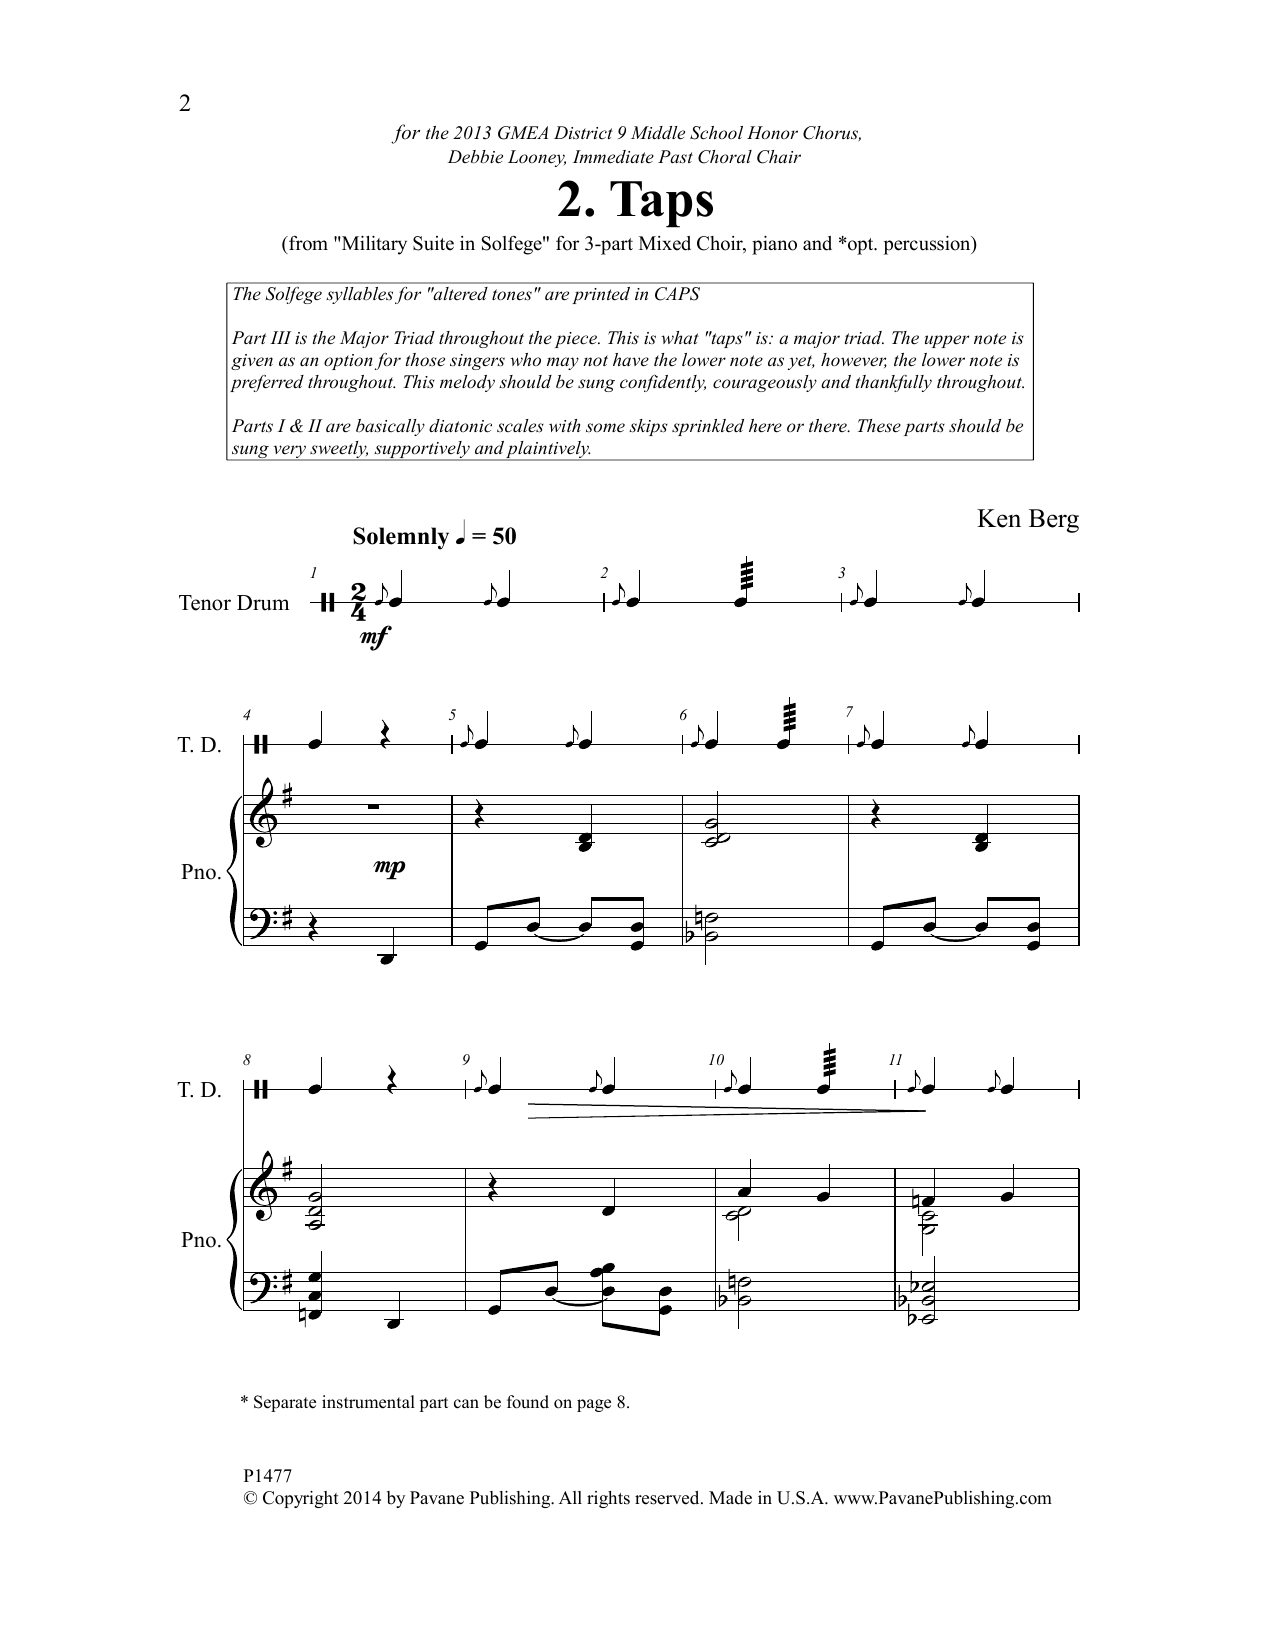 Ken Berg Taps Sheet Music Notes & Chords for Choral - Download or Print PDF